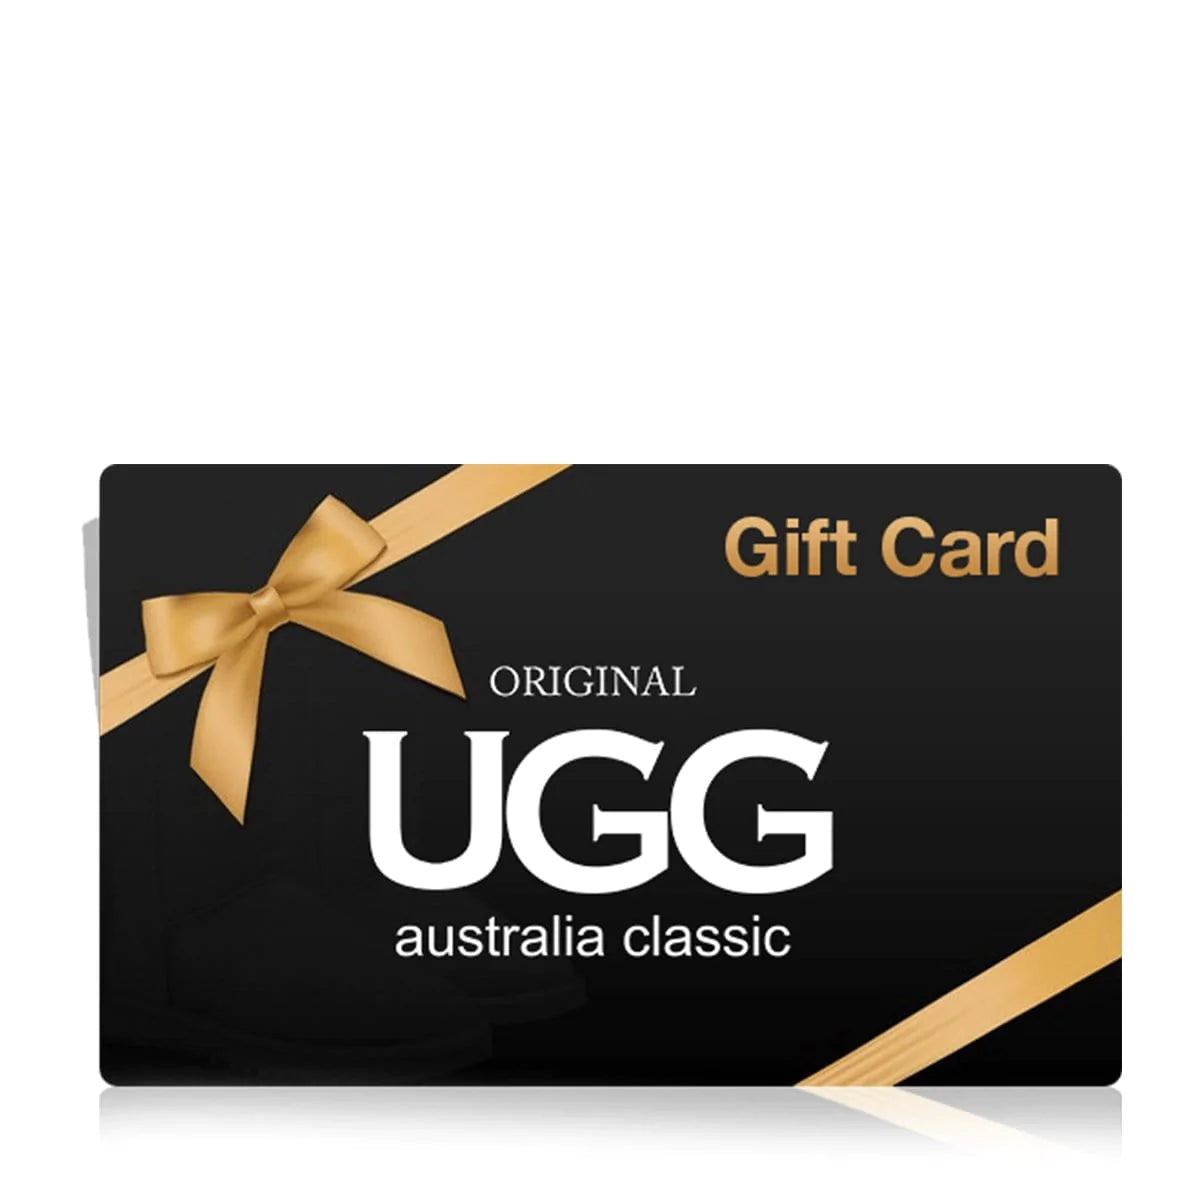 Gift Card - Original UGG Australia Classic Gift Card - Original UGG Australia Classic